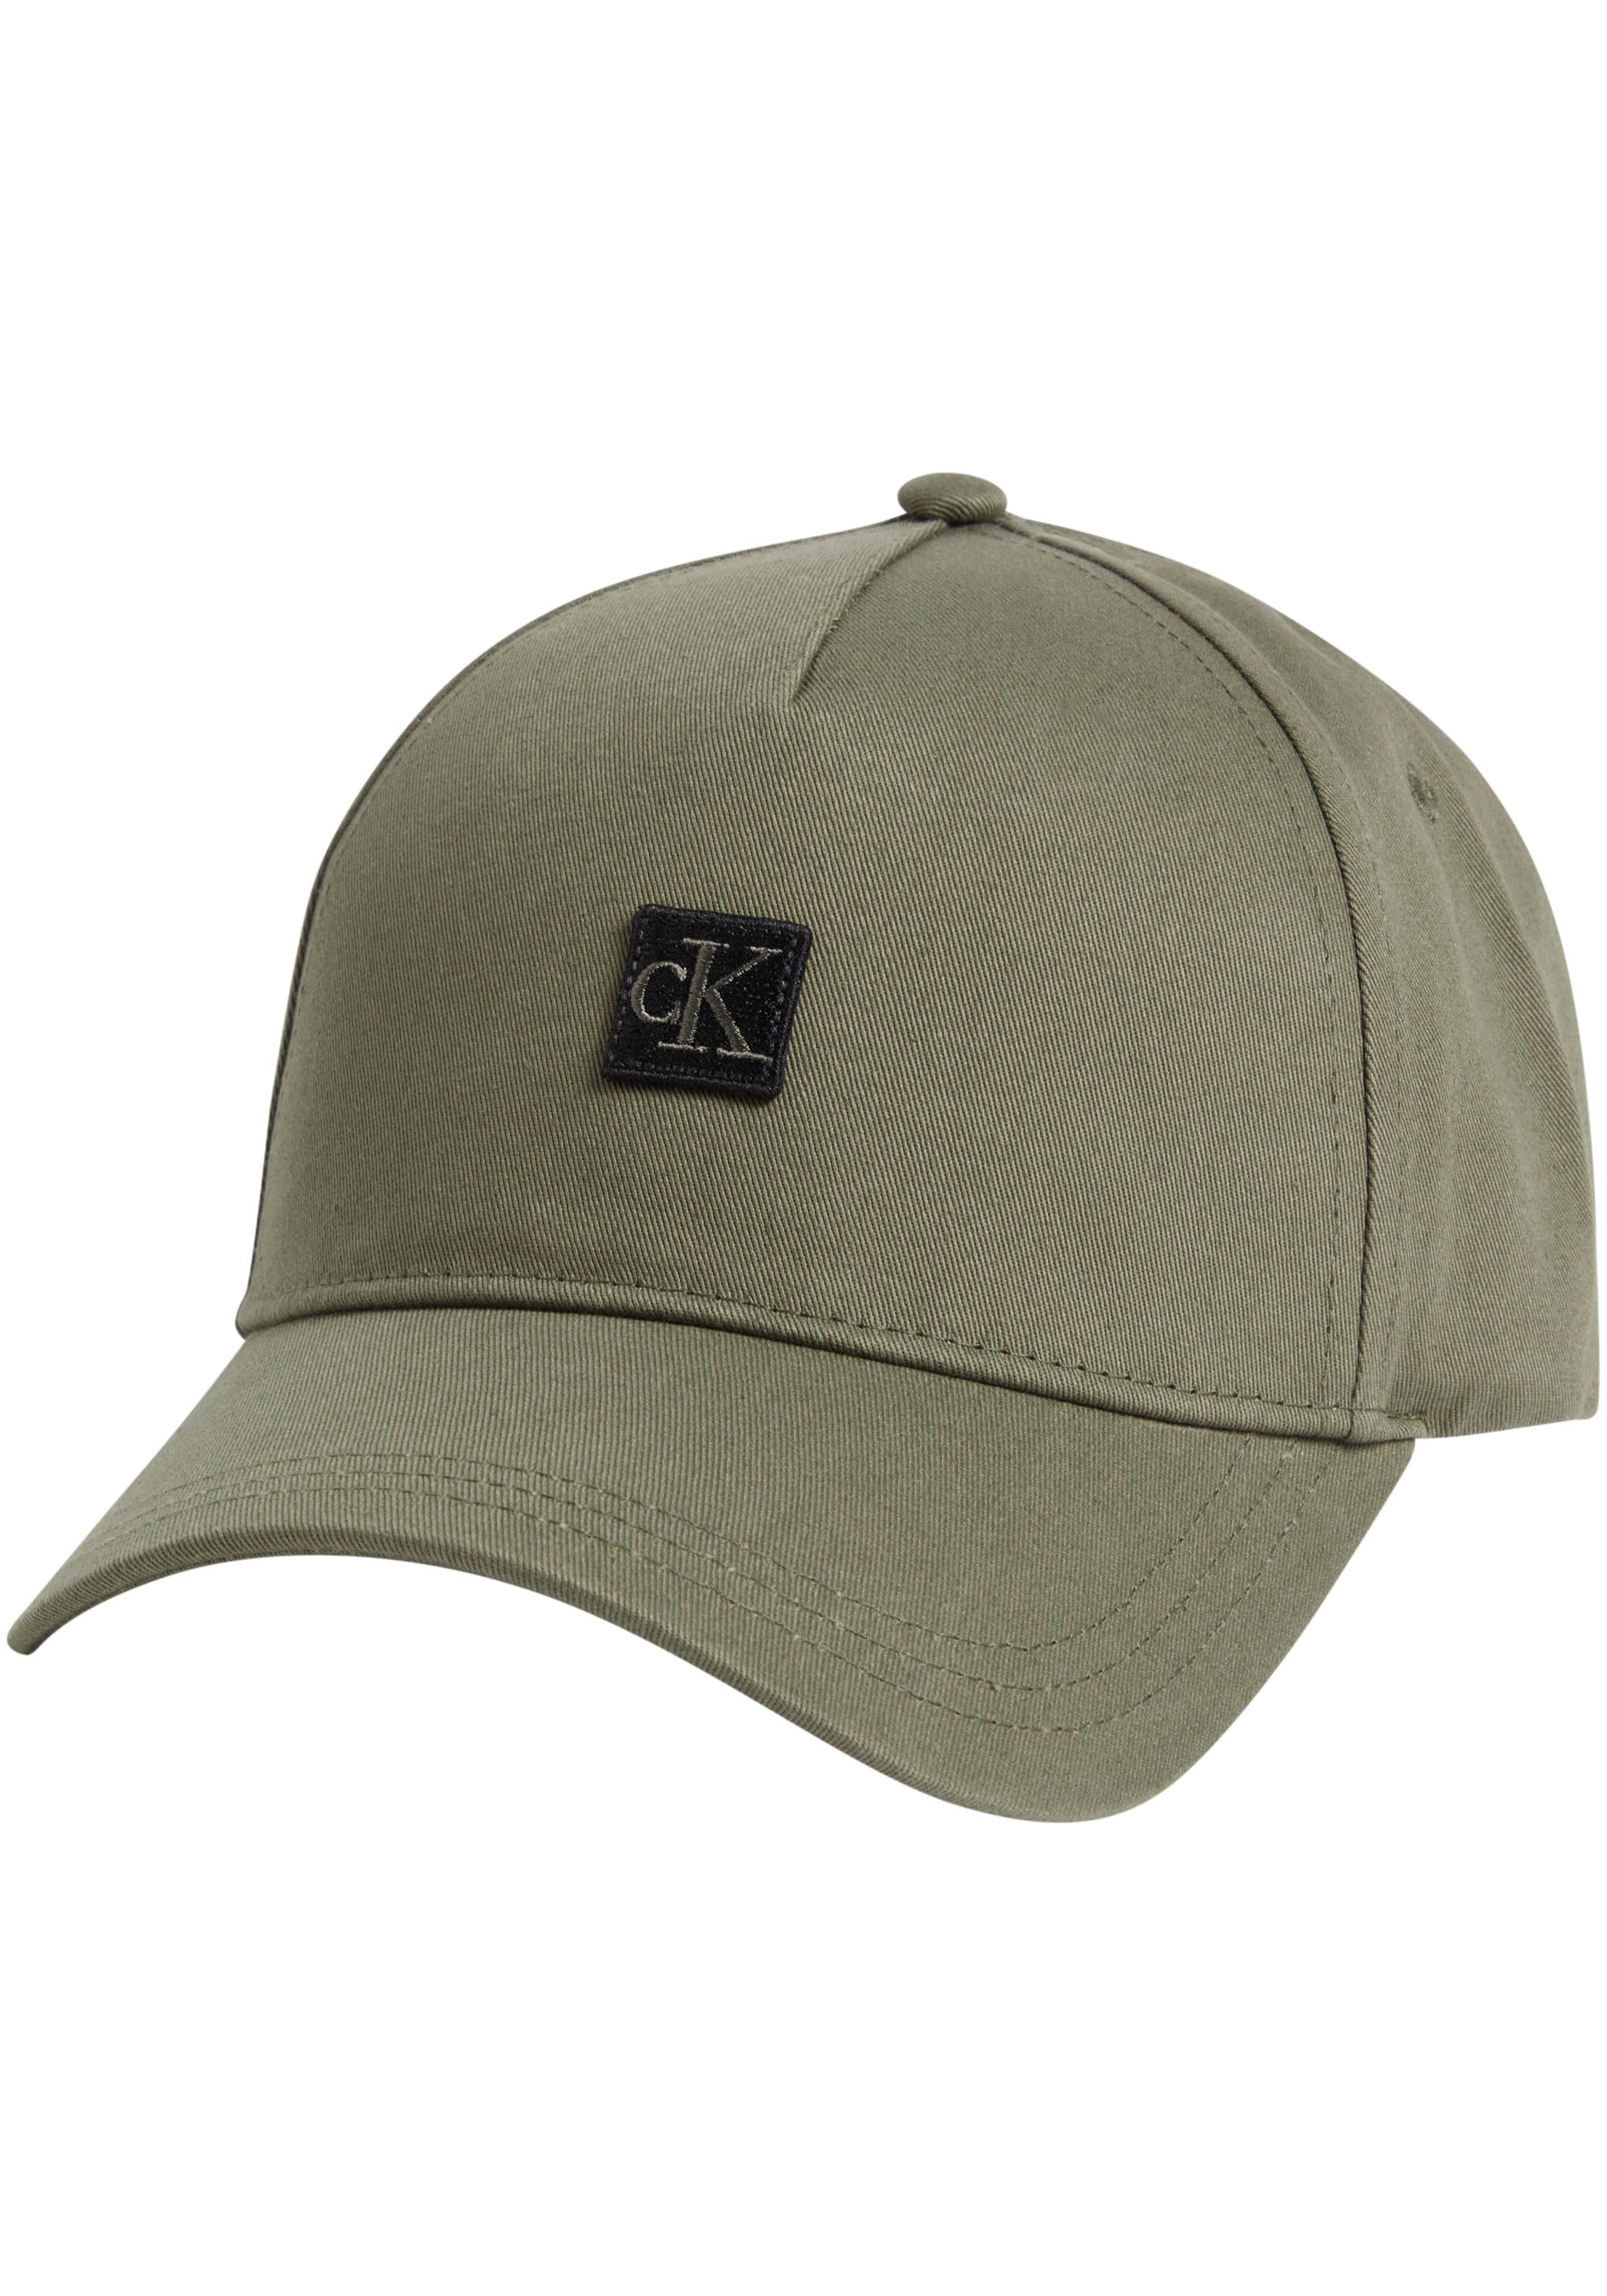 Shop Calvin »ARCHIVE OTTO Online Klein Jeans Cap Baseball im CAP«